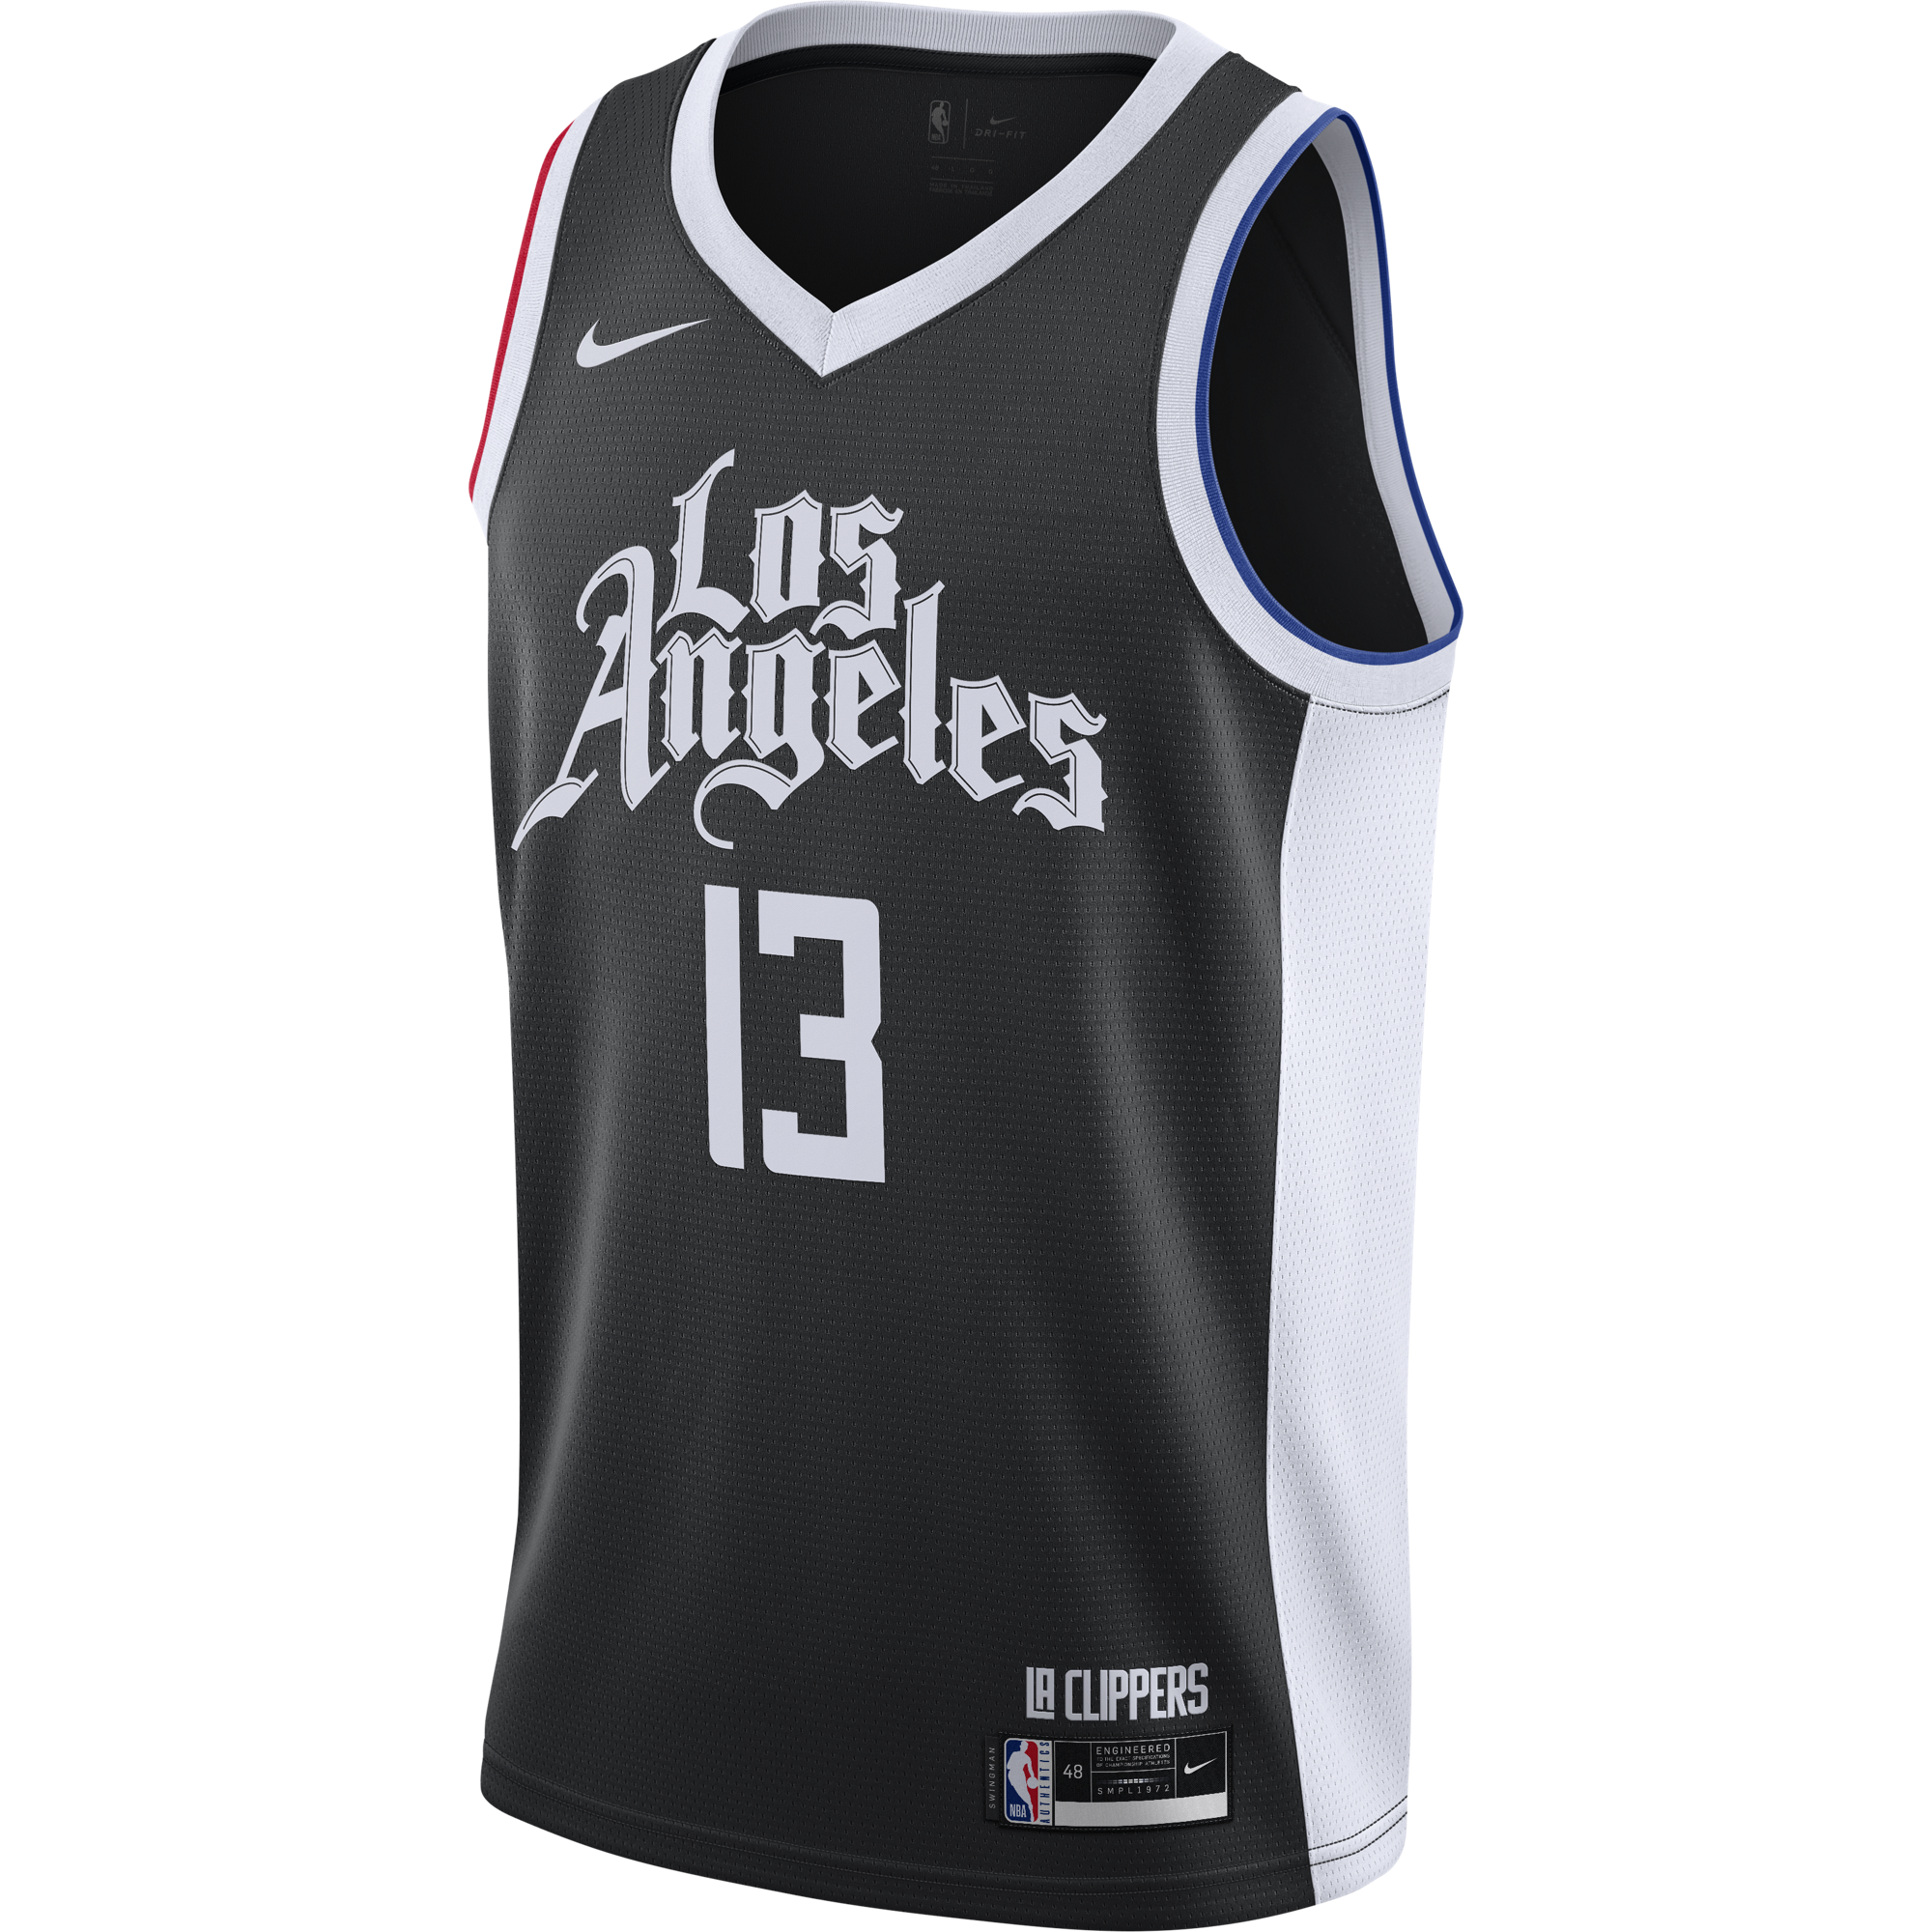 LA Clippers 2020-21 City Edition : r/LAClippers